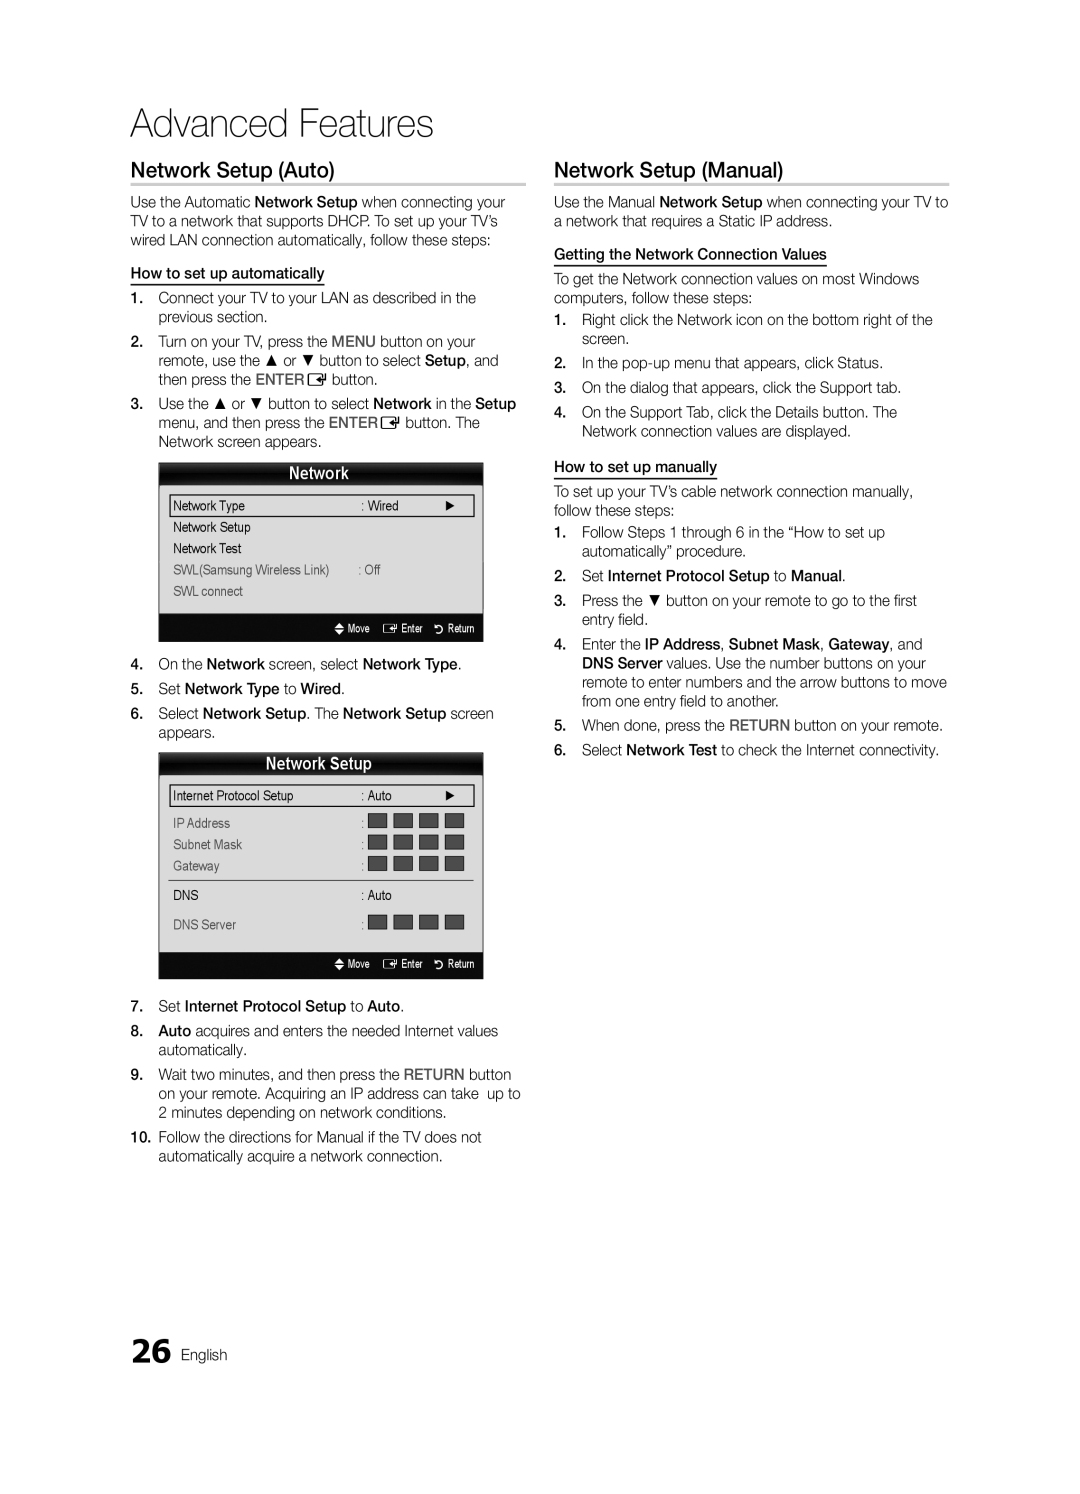 Samsung BN68-03004B-02, UC5000-ZC user manual Network Setup Auto, Network Setup Manual, Advanced Features 